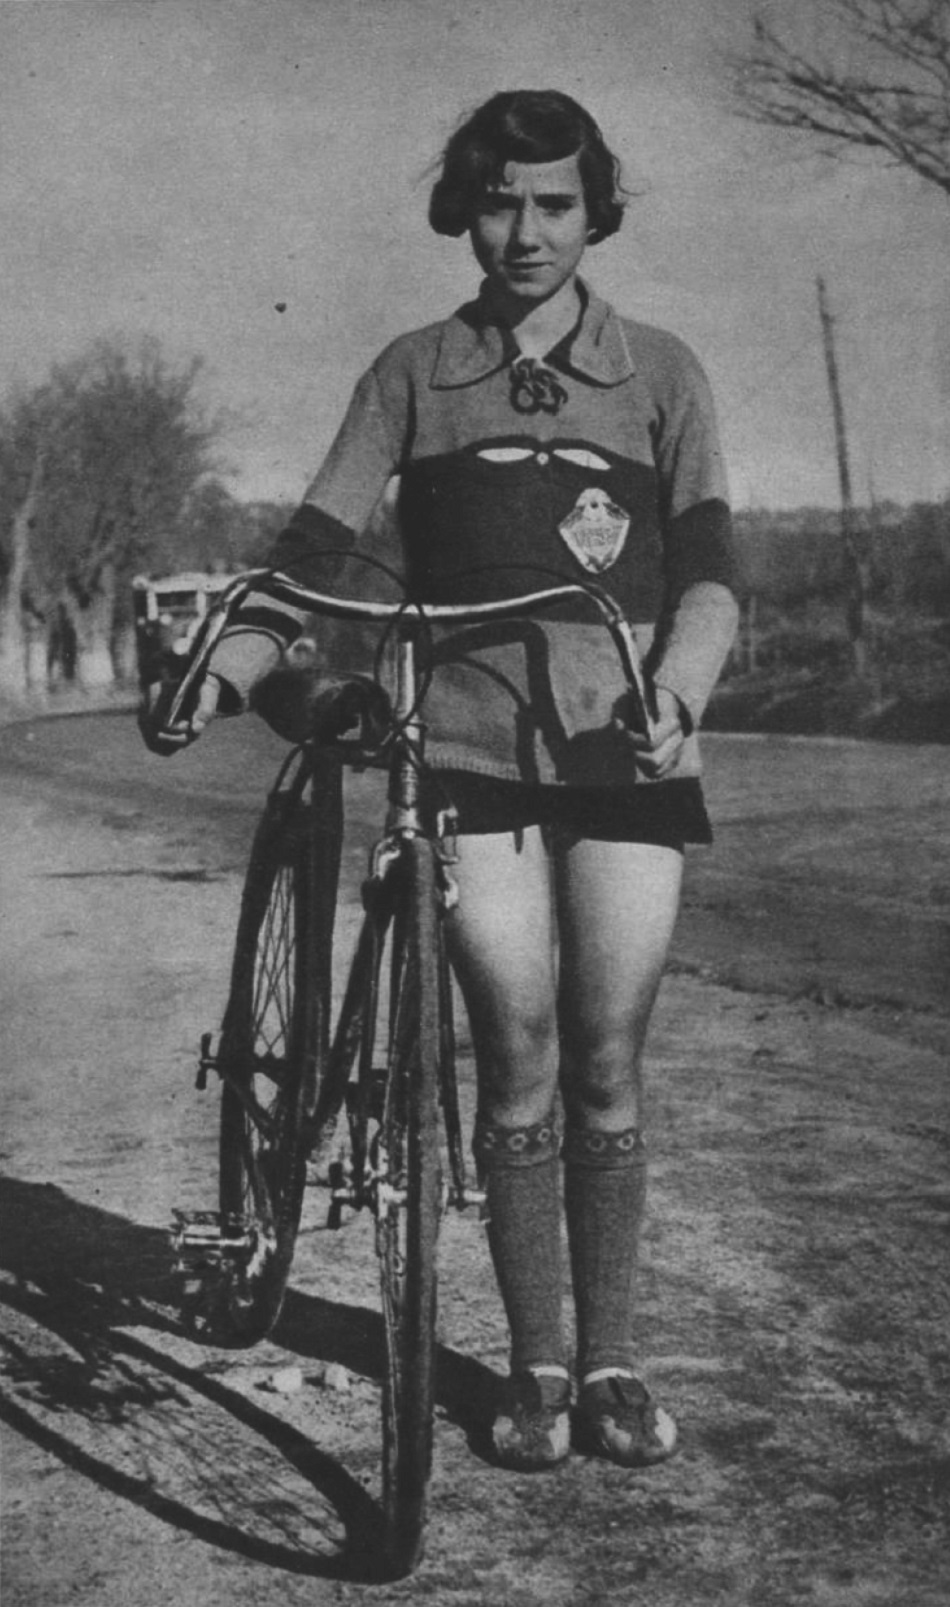 Ciclismo épico, legendario: Bartali, Coppi, Anquetil, Bahamontes, Gaul, Gimondi, Merckx... - Página 2 Fichero_658578_20180605